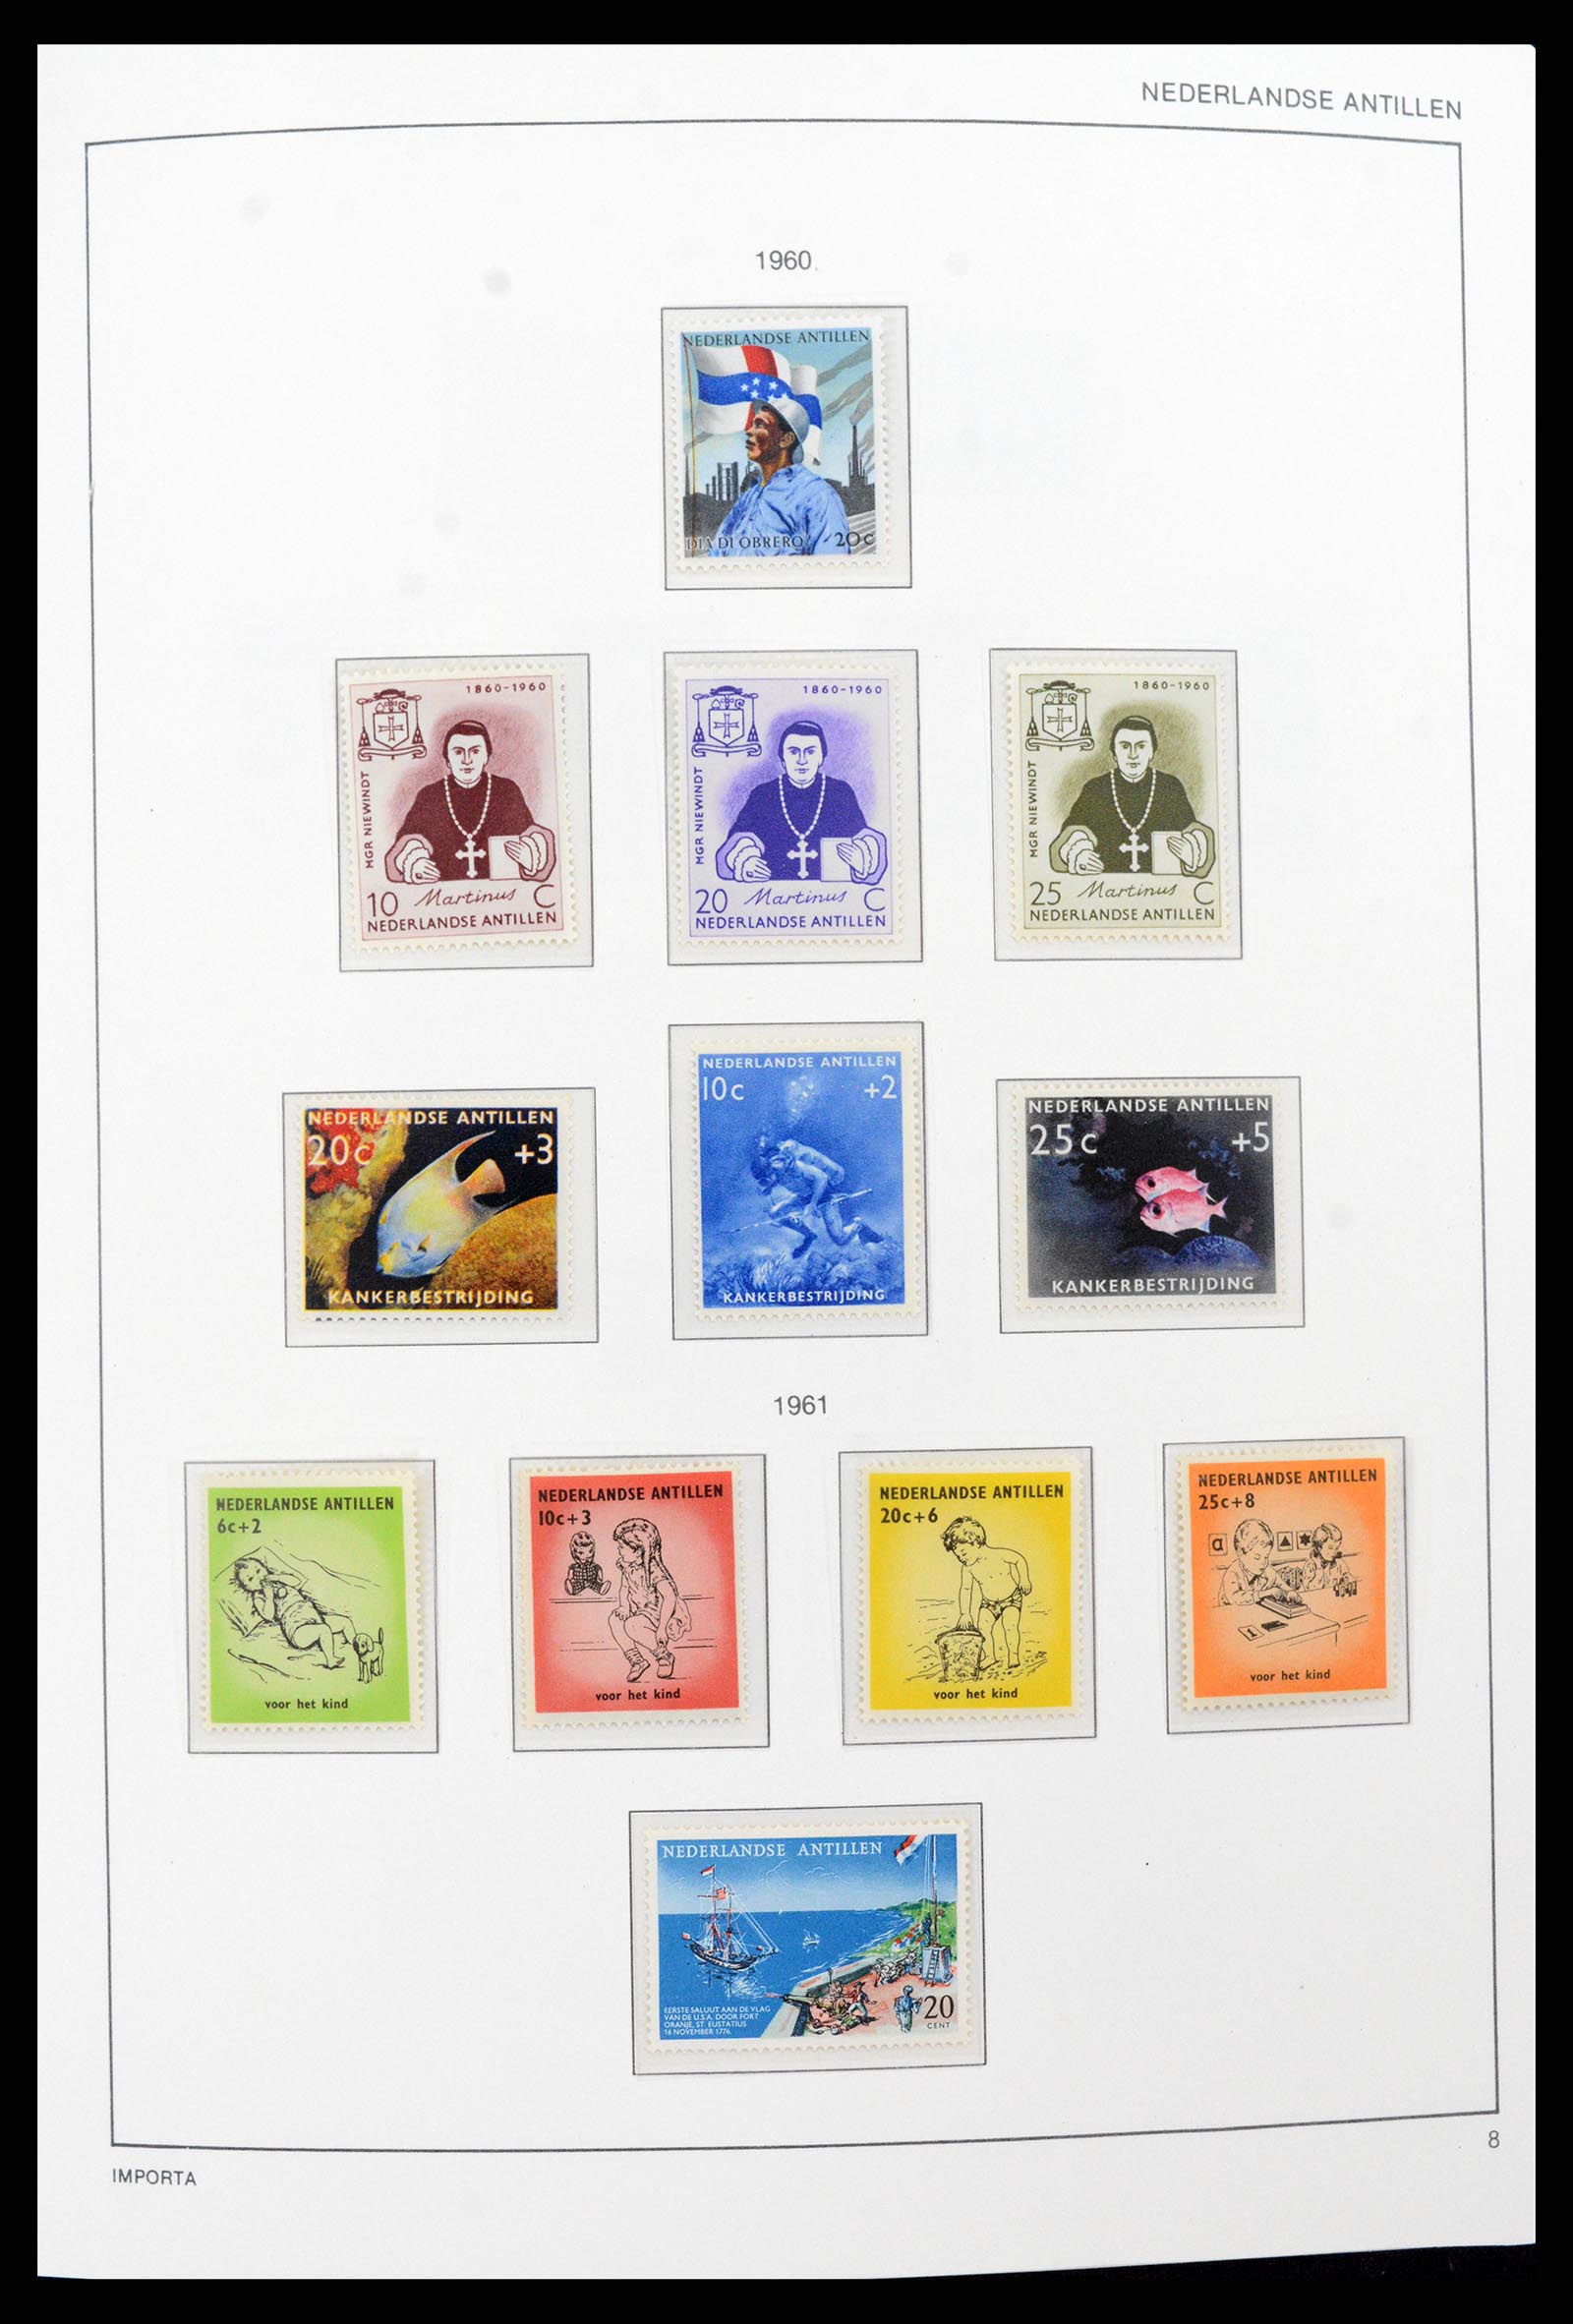 37693 008 - Stamp collection 37693 Netherlands Antilles 1949-2001.